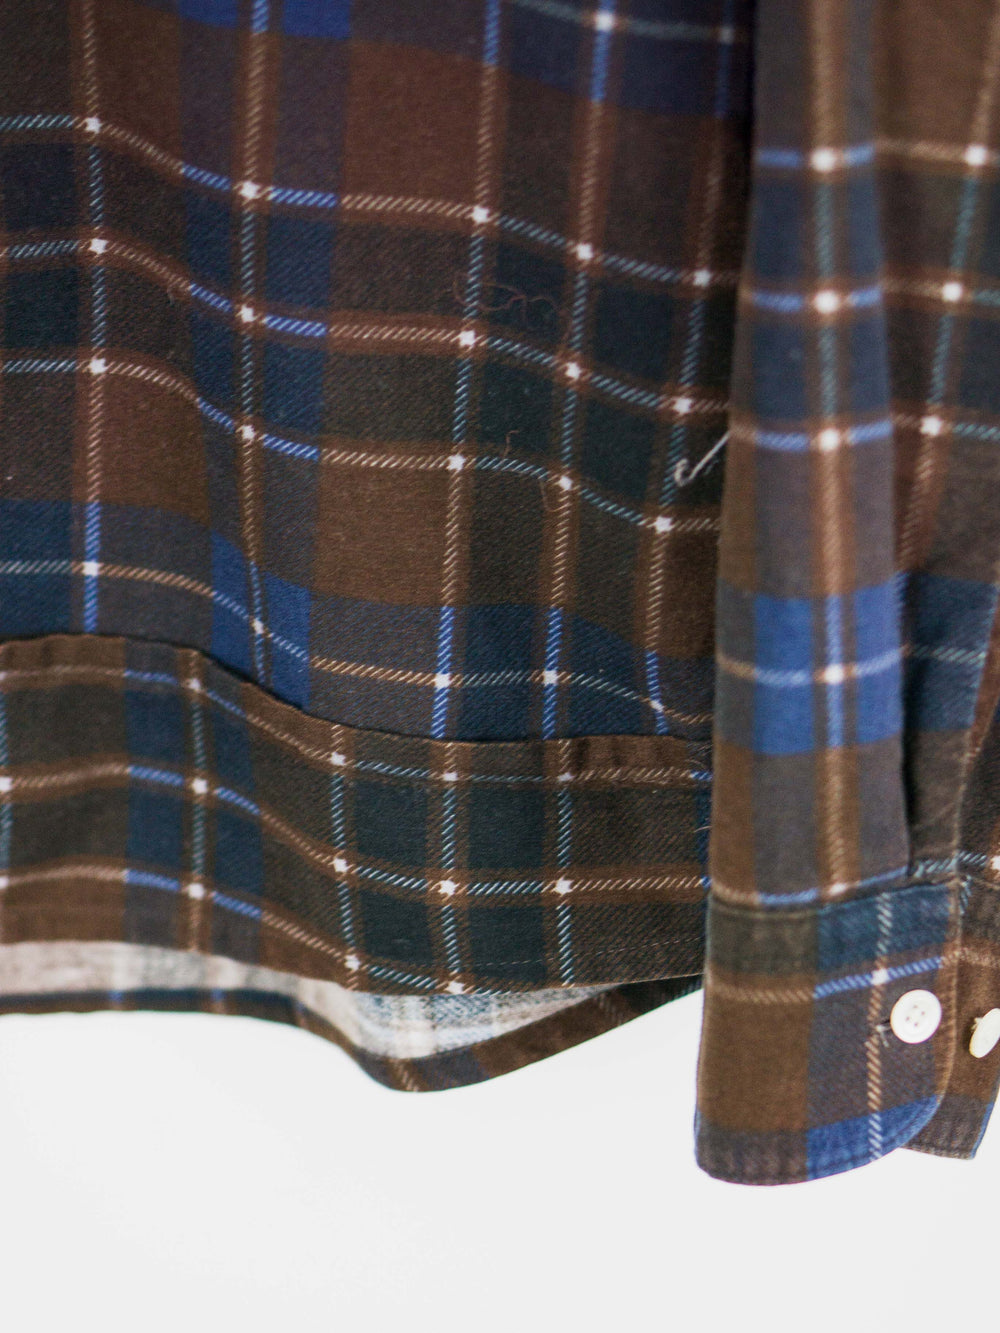 Undercover SS03 Distressed Tartan Set w/ Kilted Trouser & Shirt